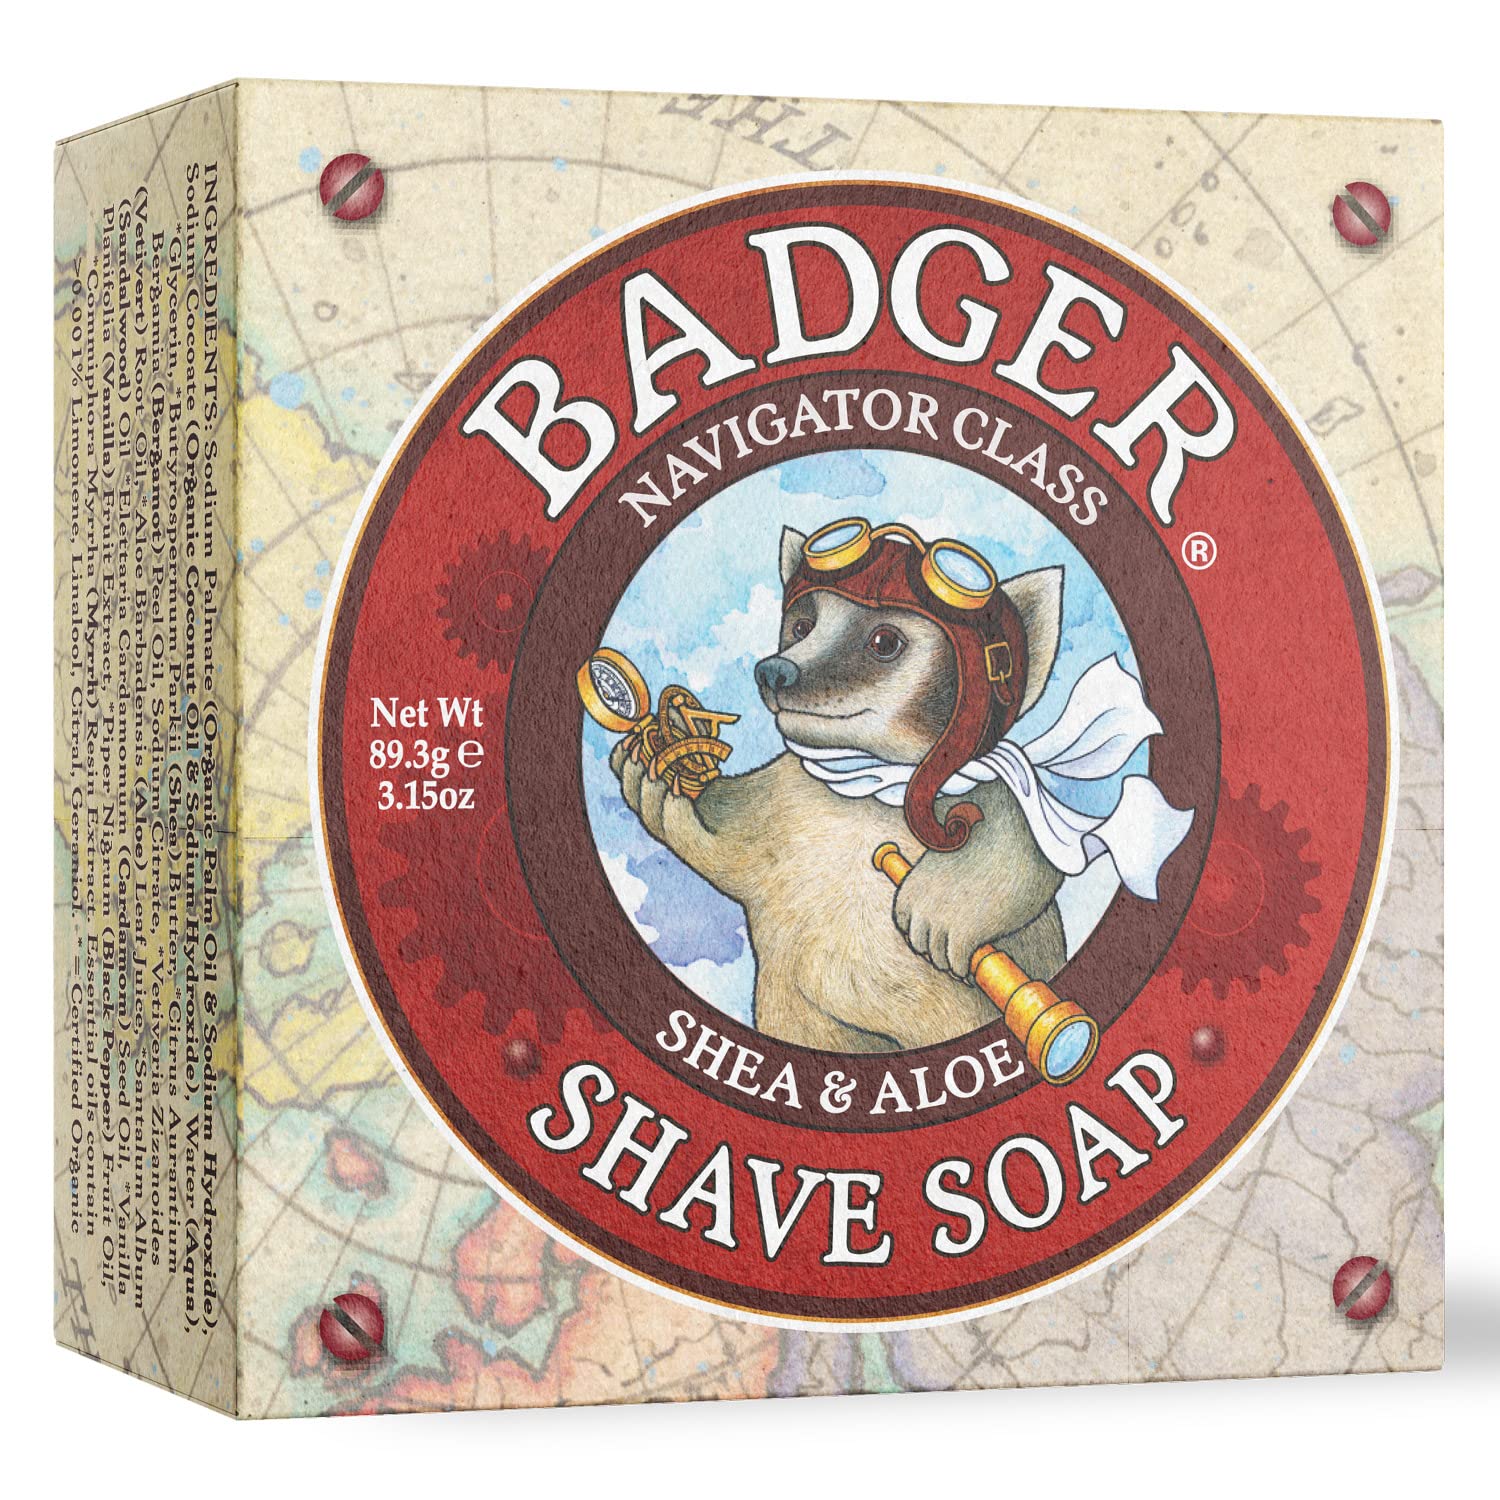 Badger Shaving Soap Puck